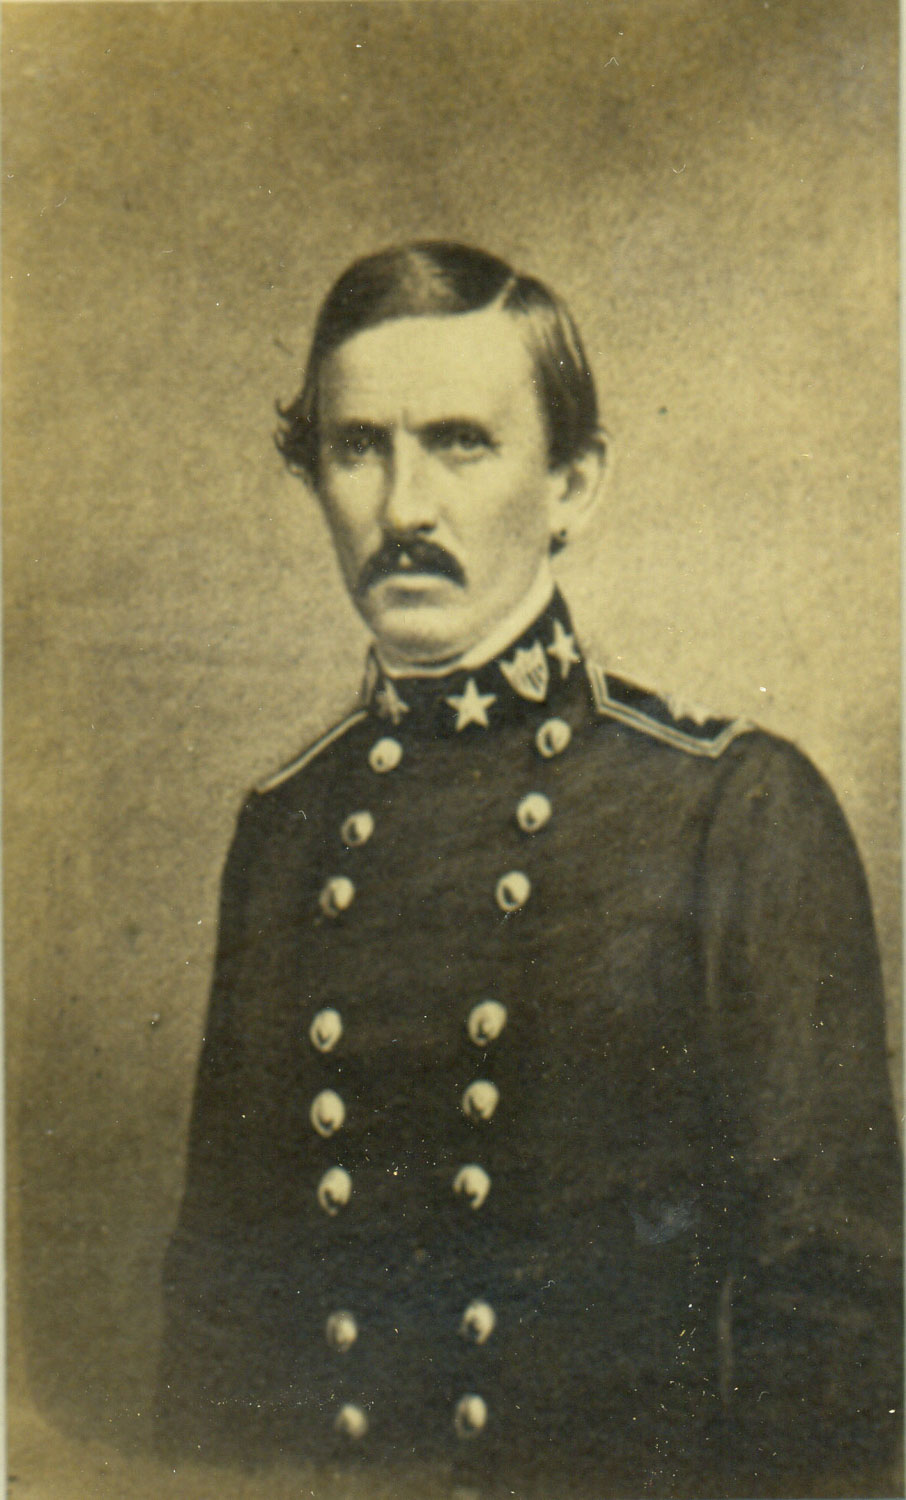 Major General George B. Crittenden